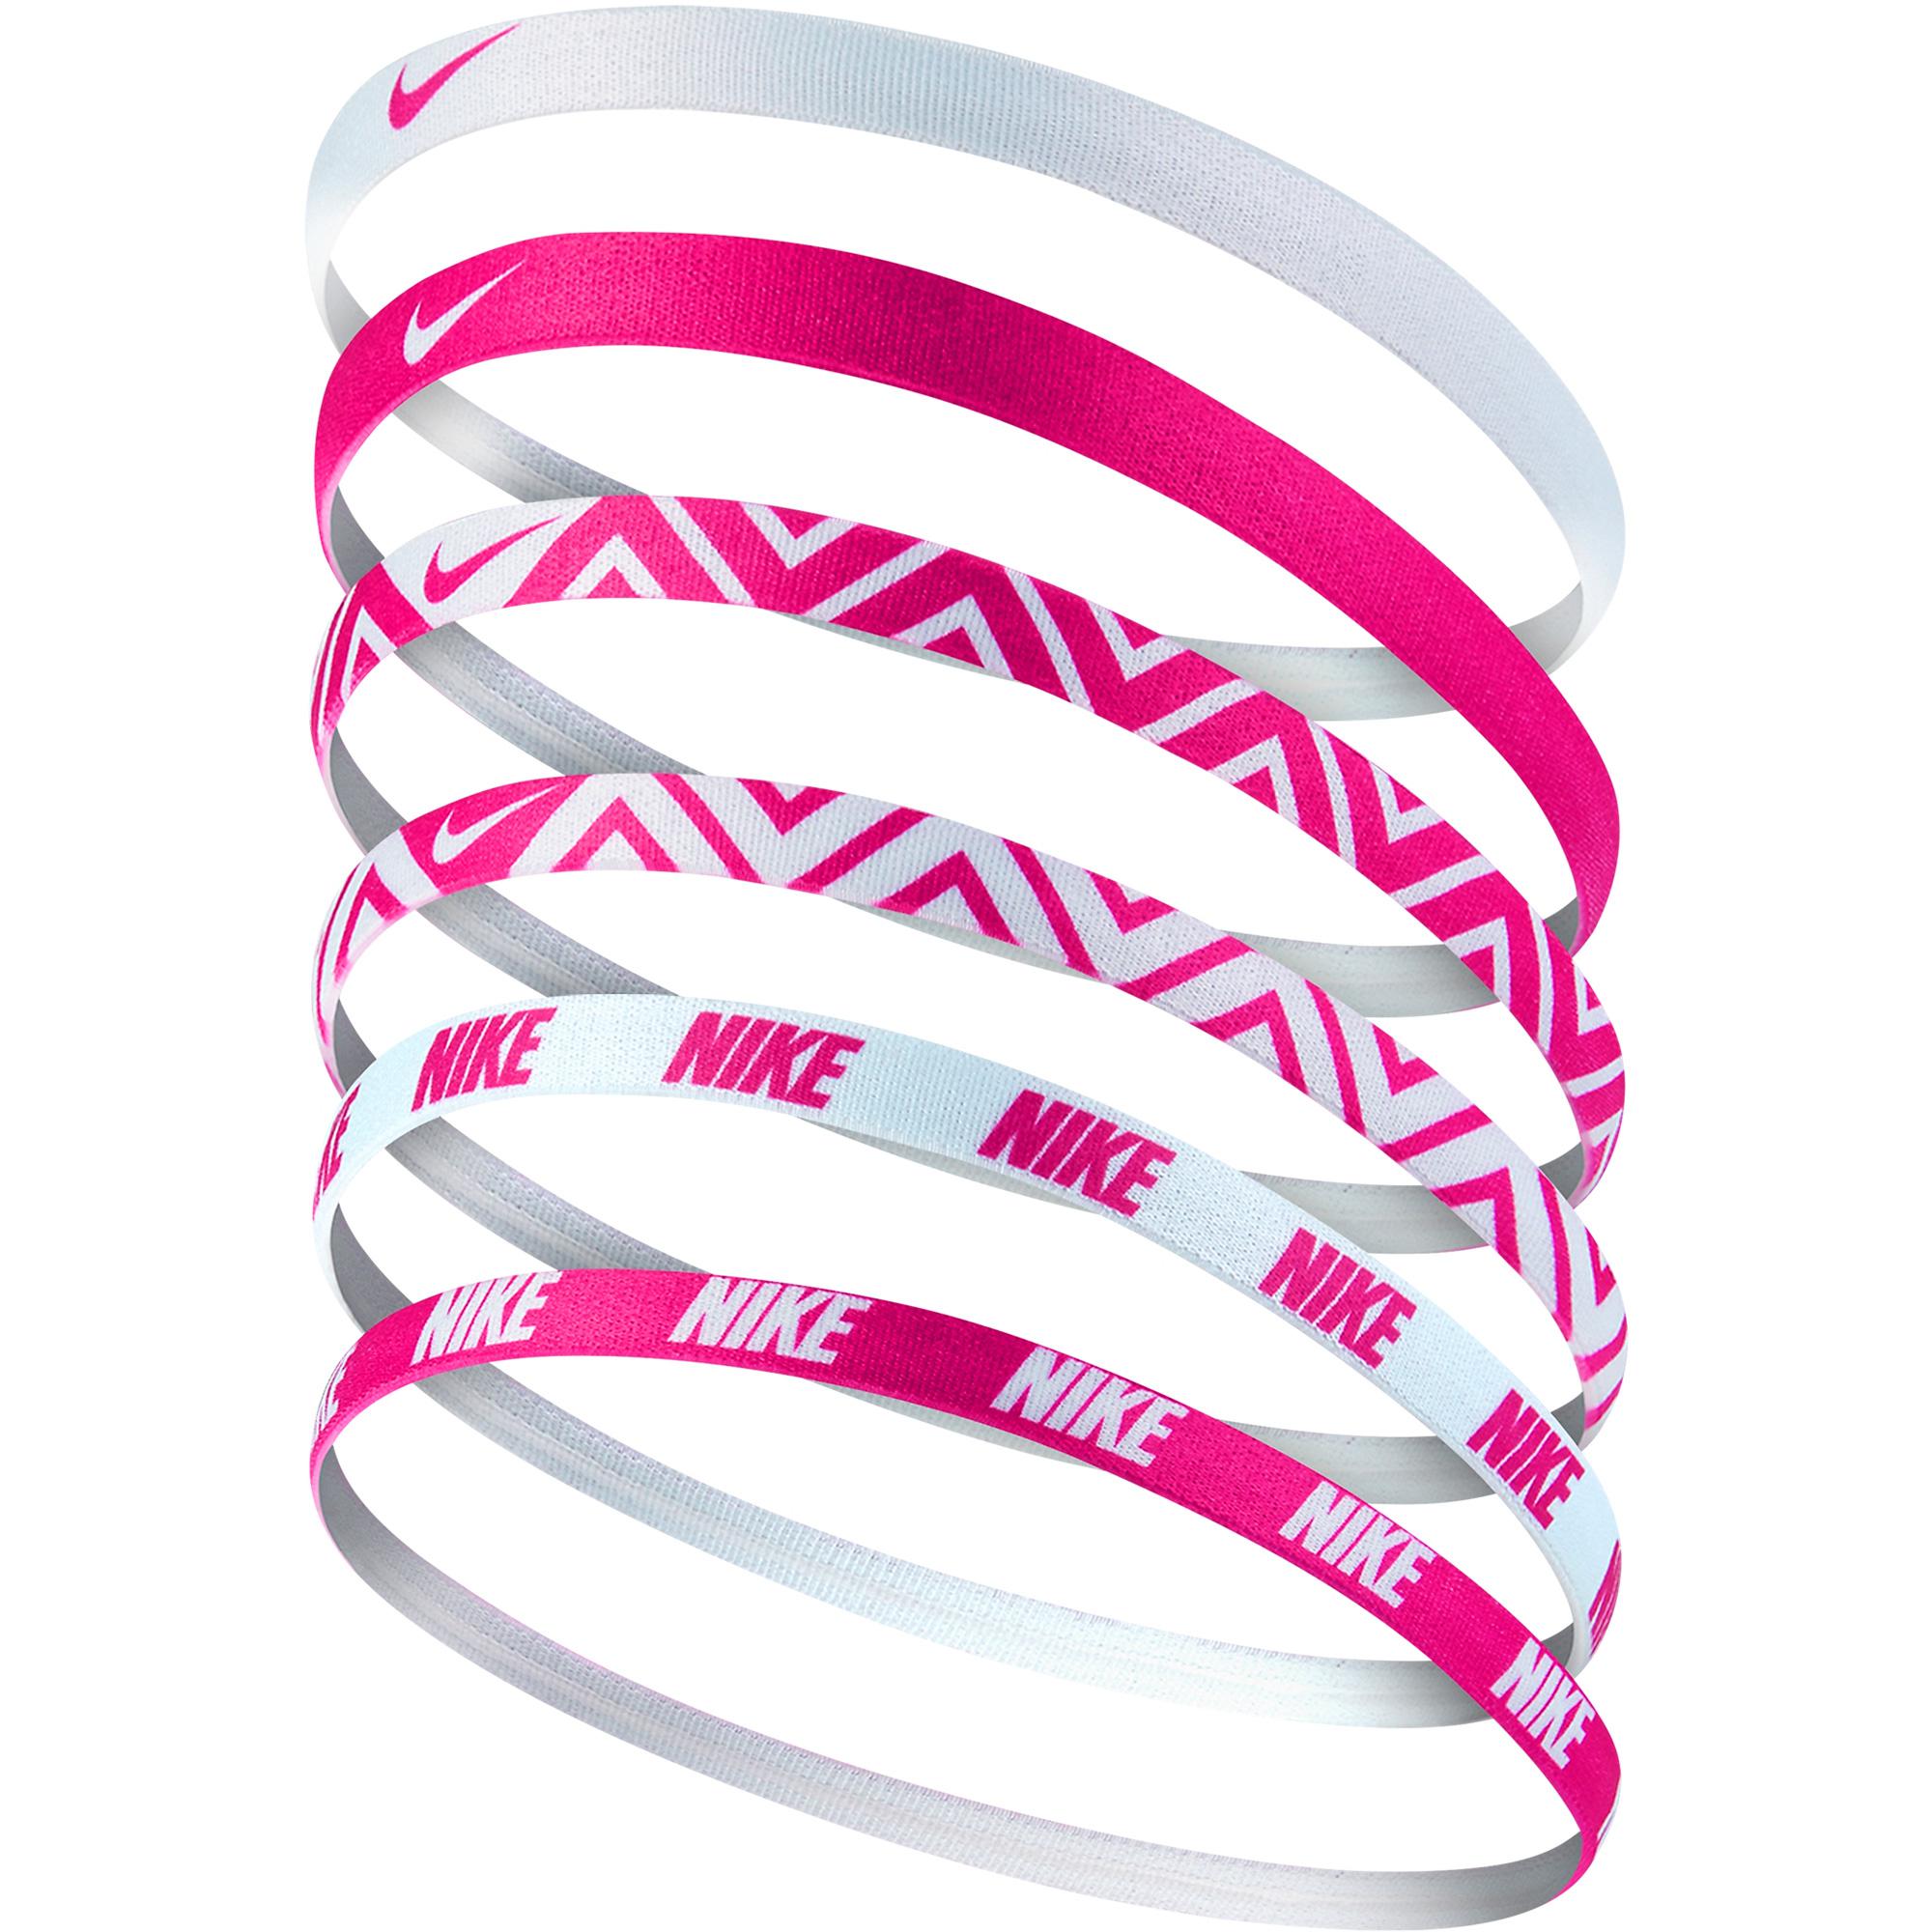 Nike Sports Printed Headbands - Pack of 6 (Vivid Pink/White ...